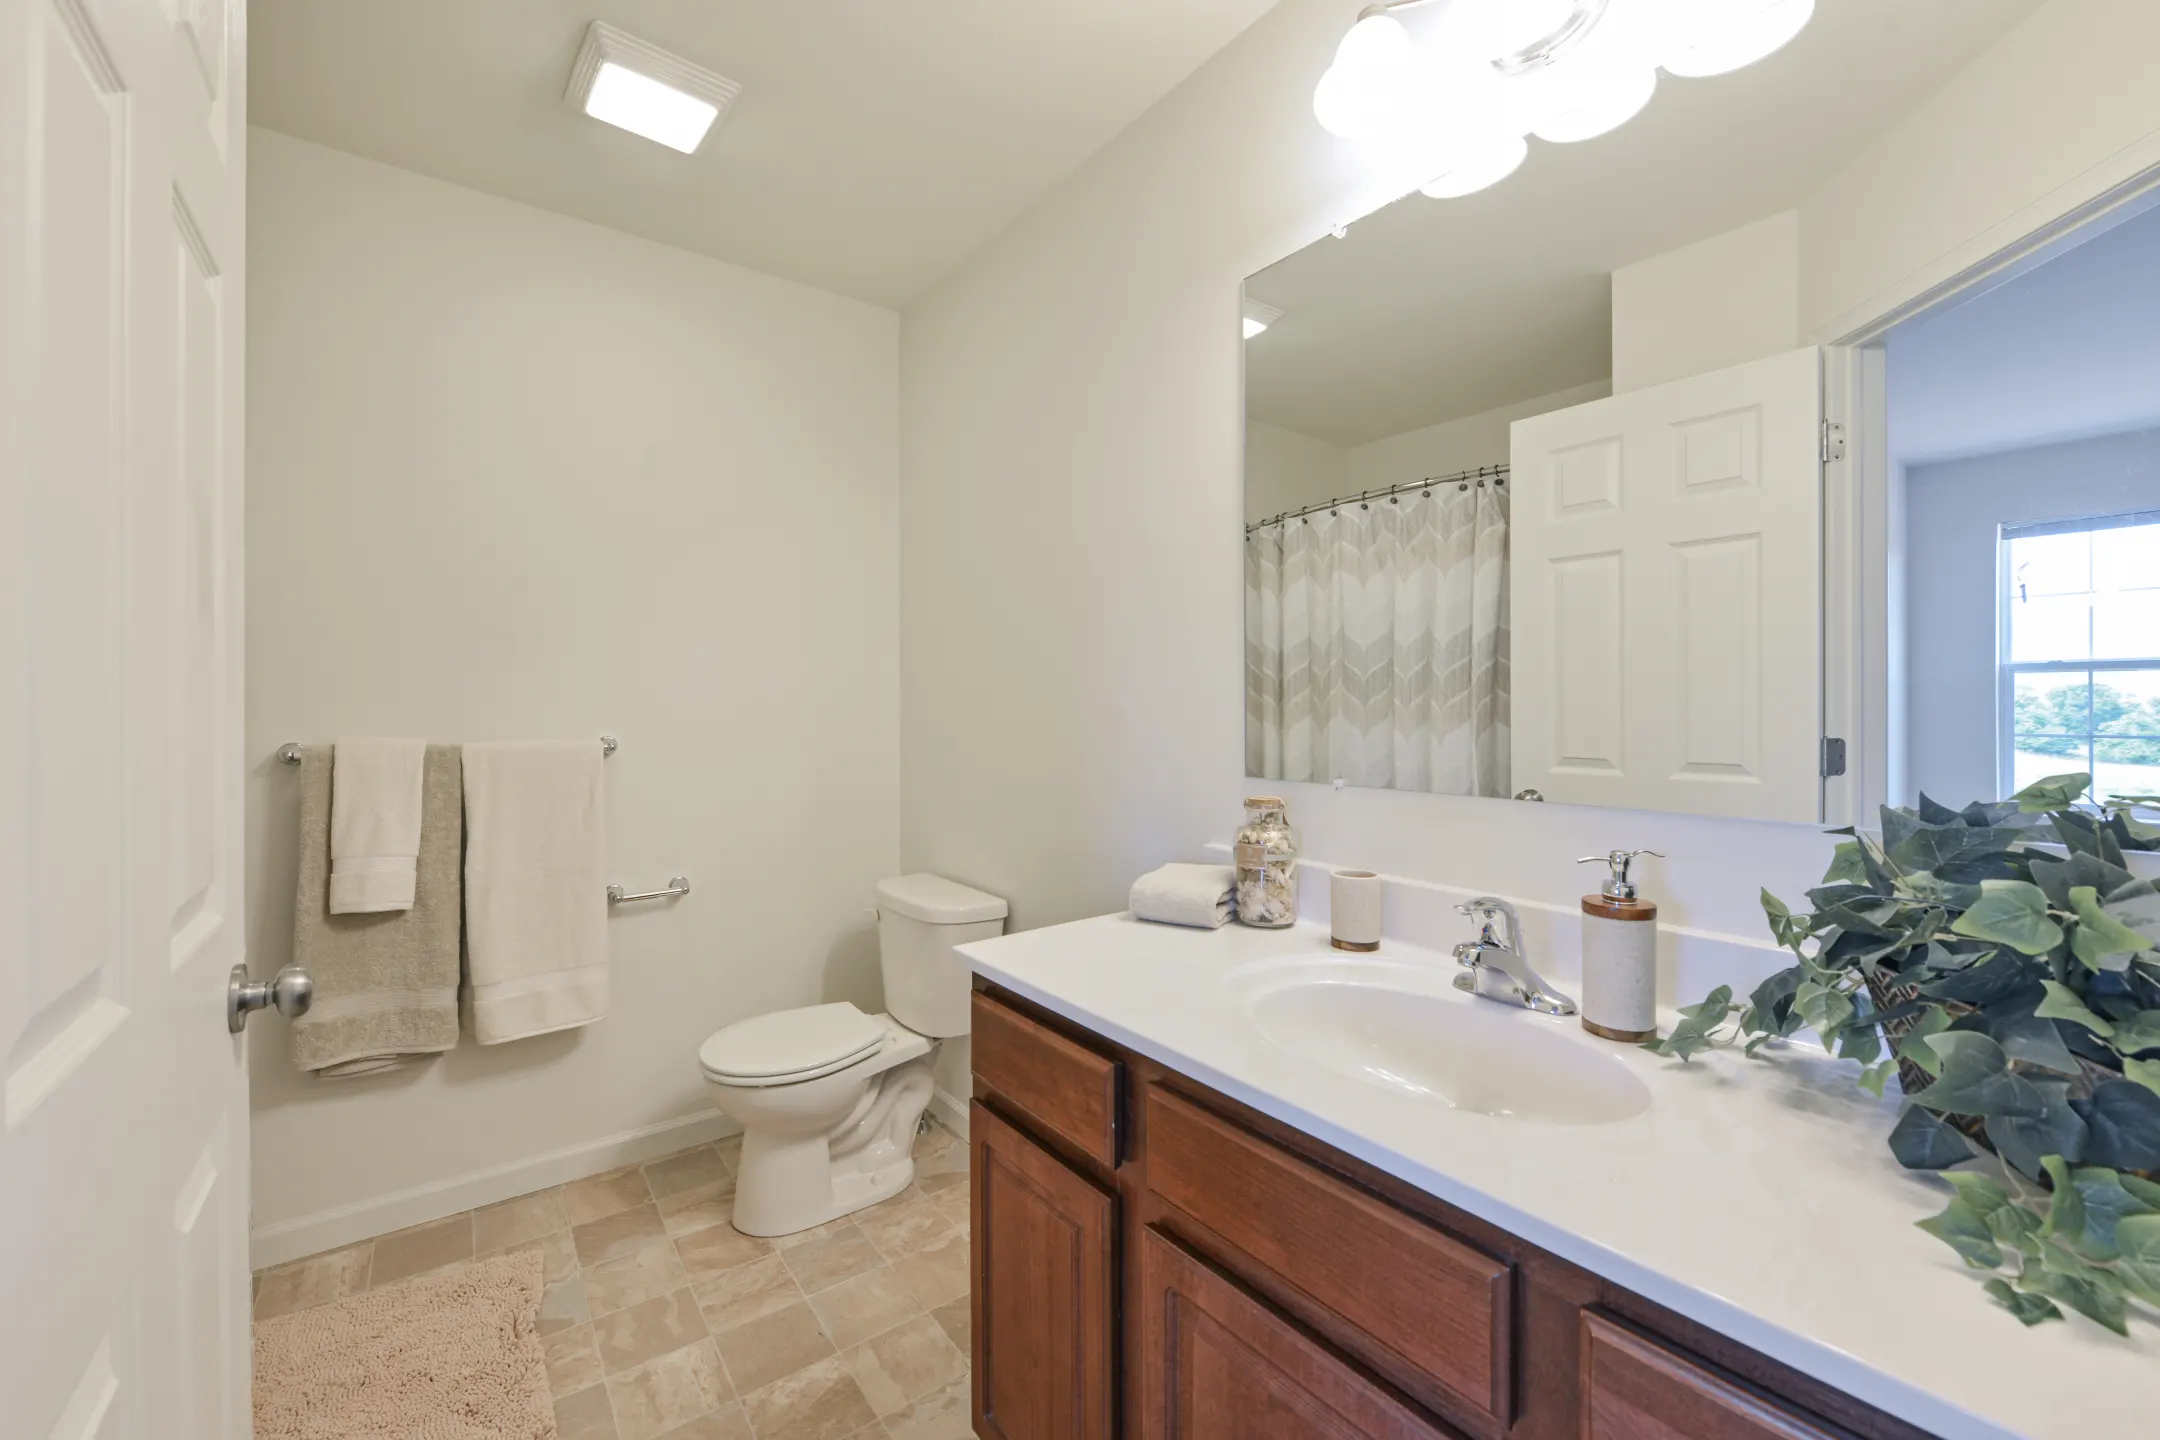 Bathroom - Townhomes at Paxton Creek - Harrisburg, PA